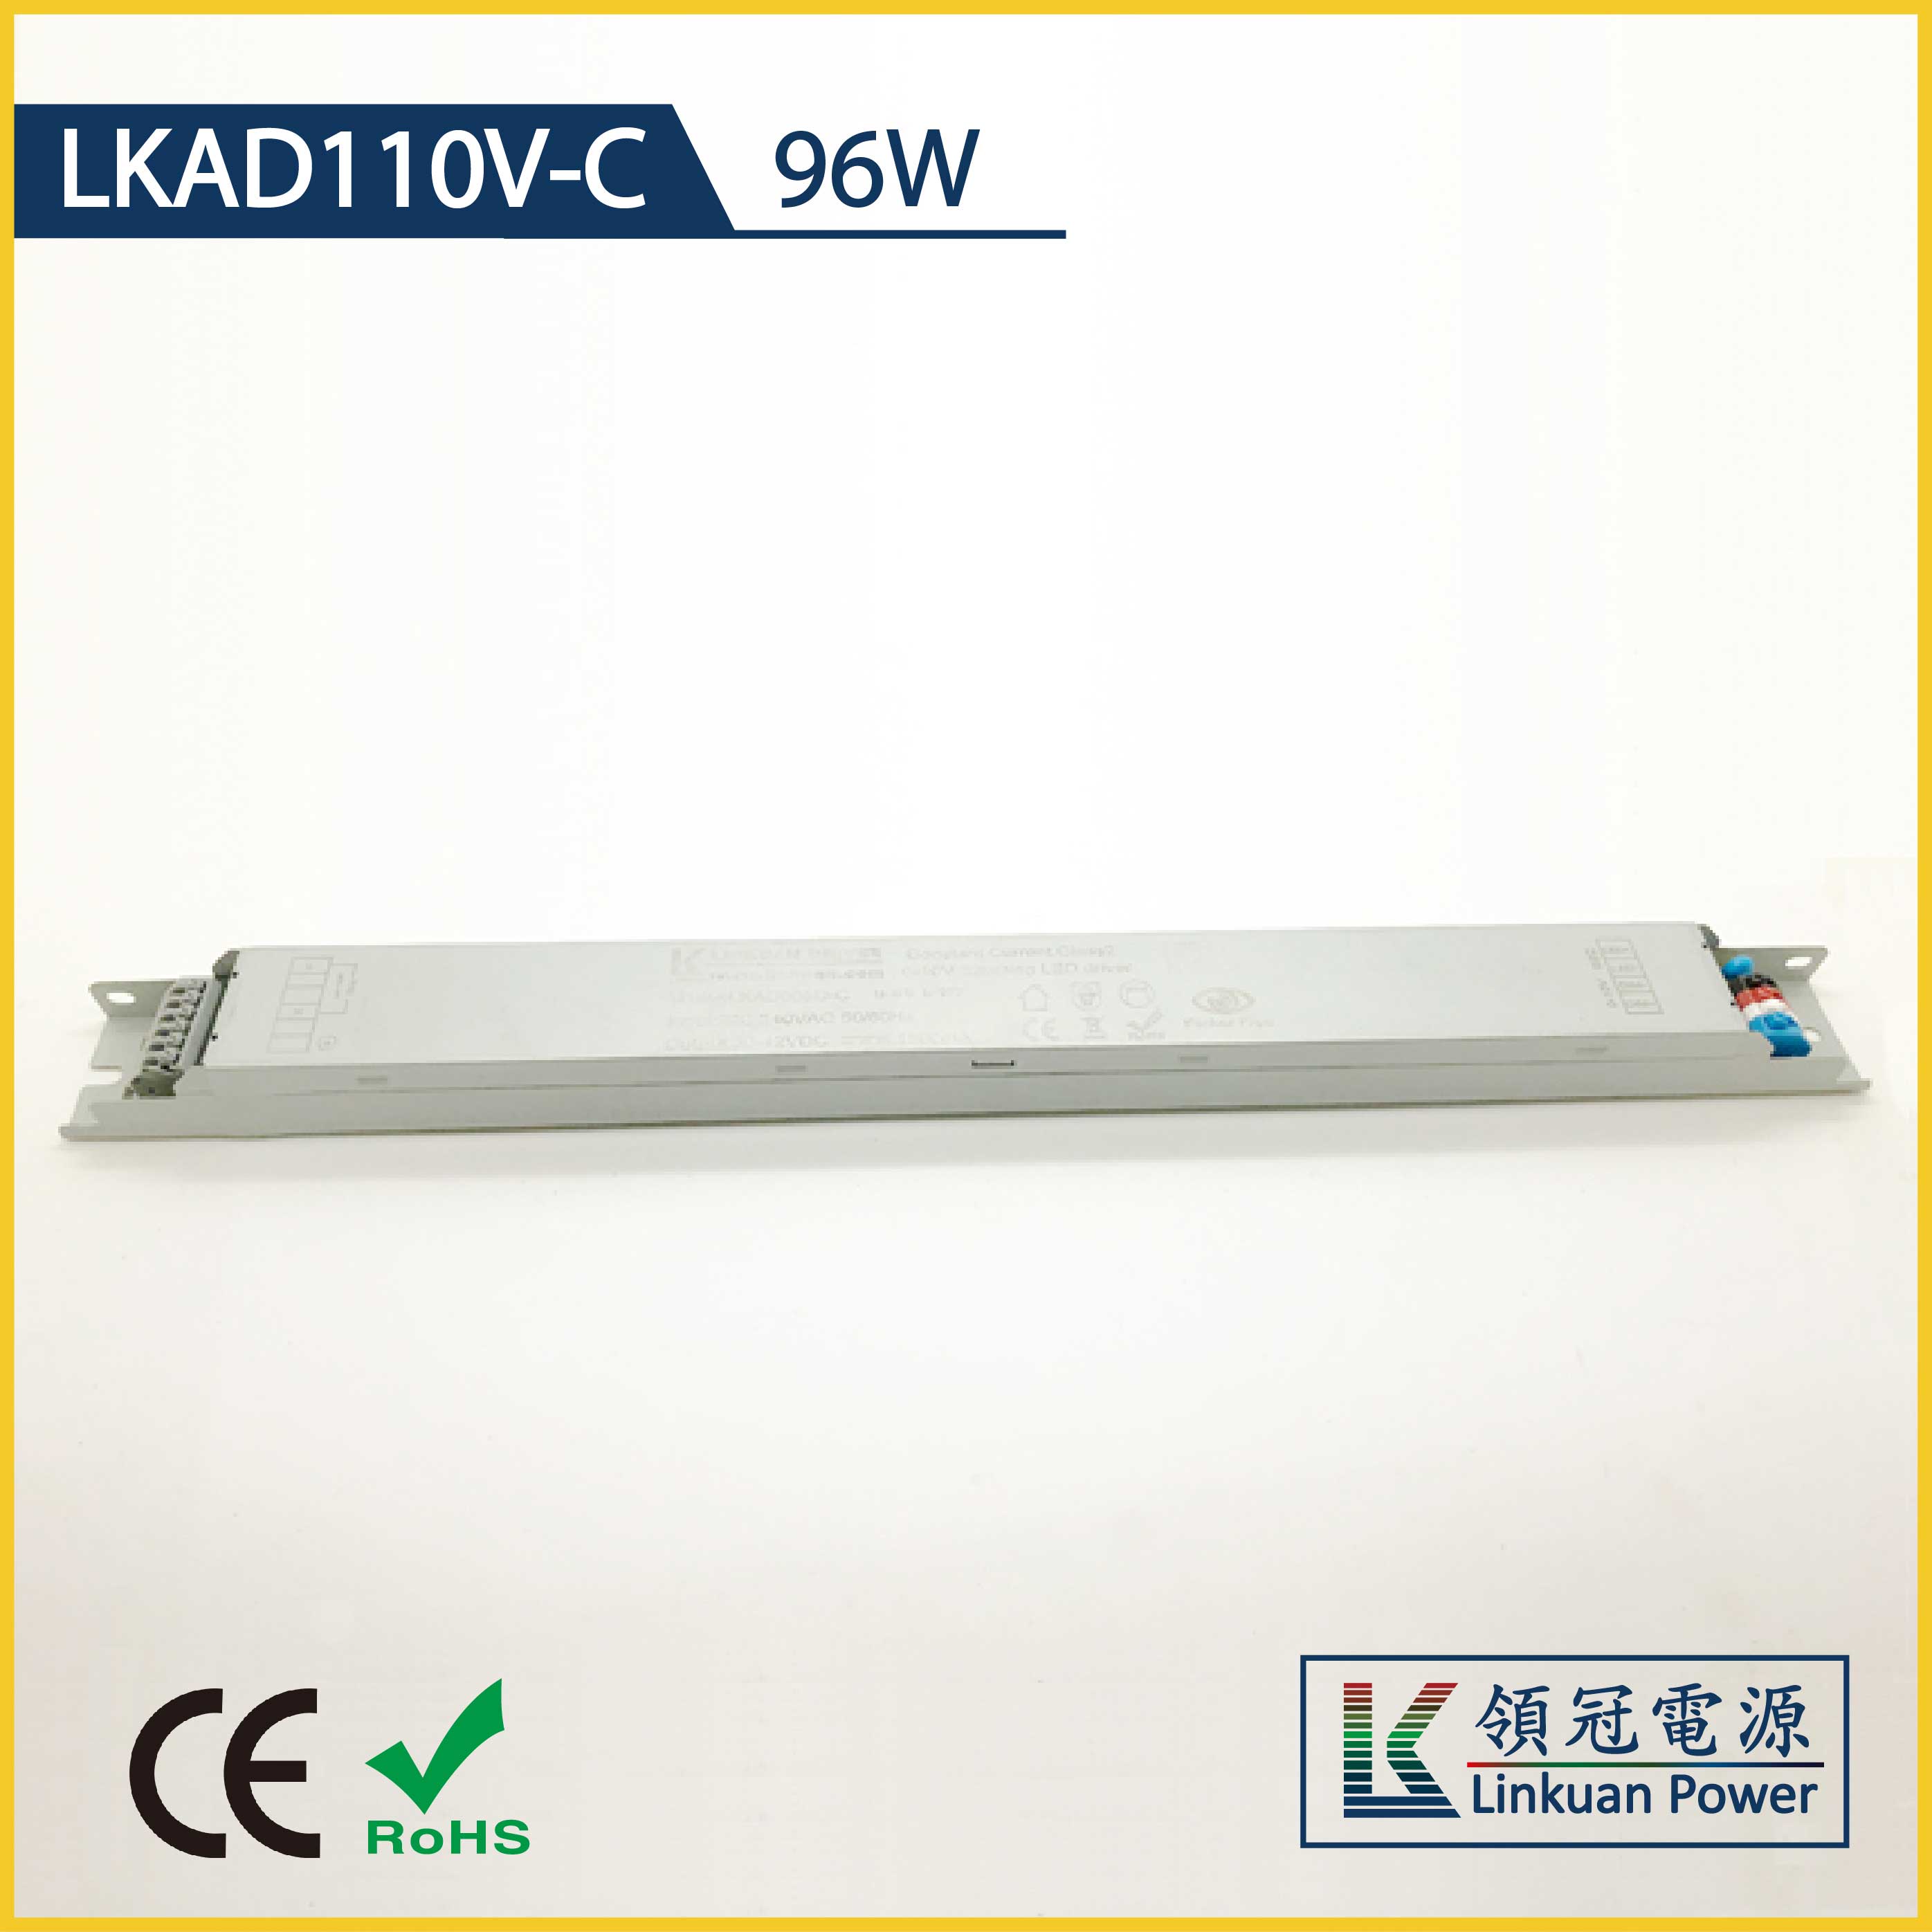 LKAD110V-C 96W 12/24V 8A/4.5A Linear Lamp 0-10V dimming  led driver